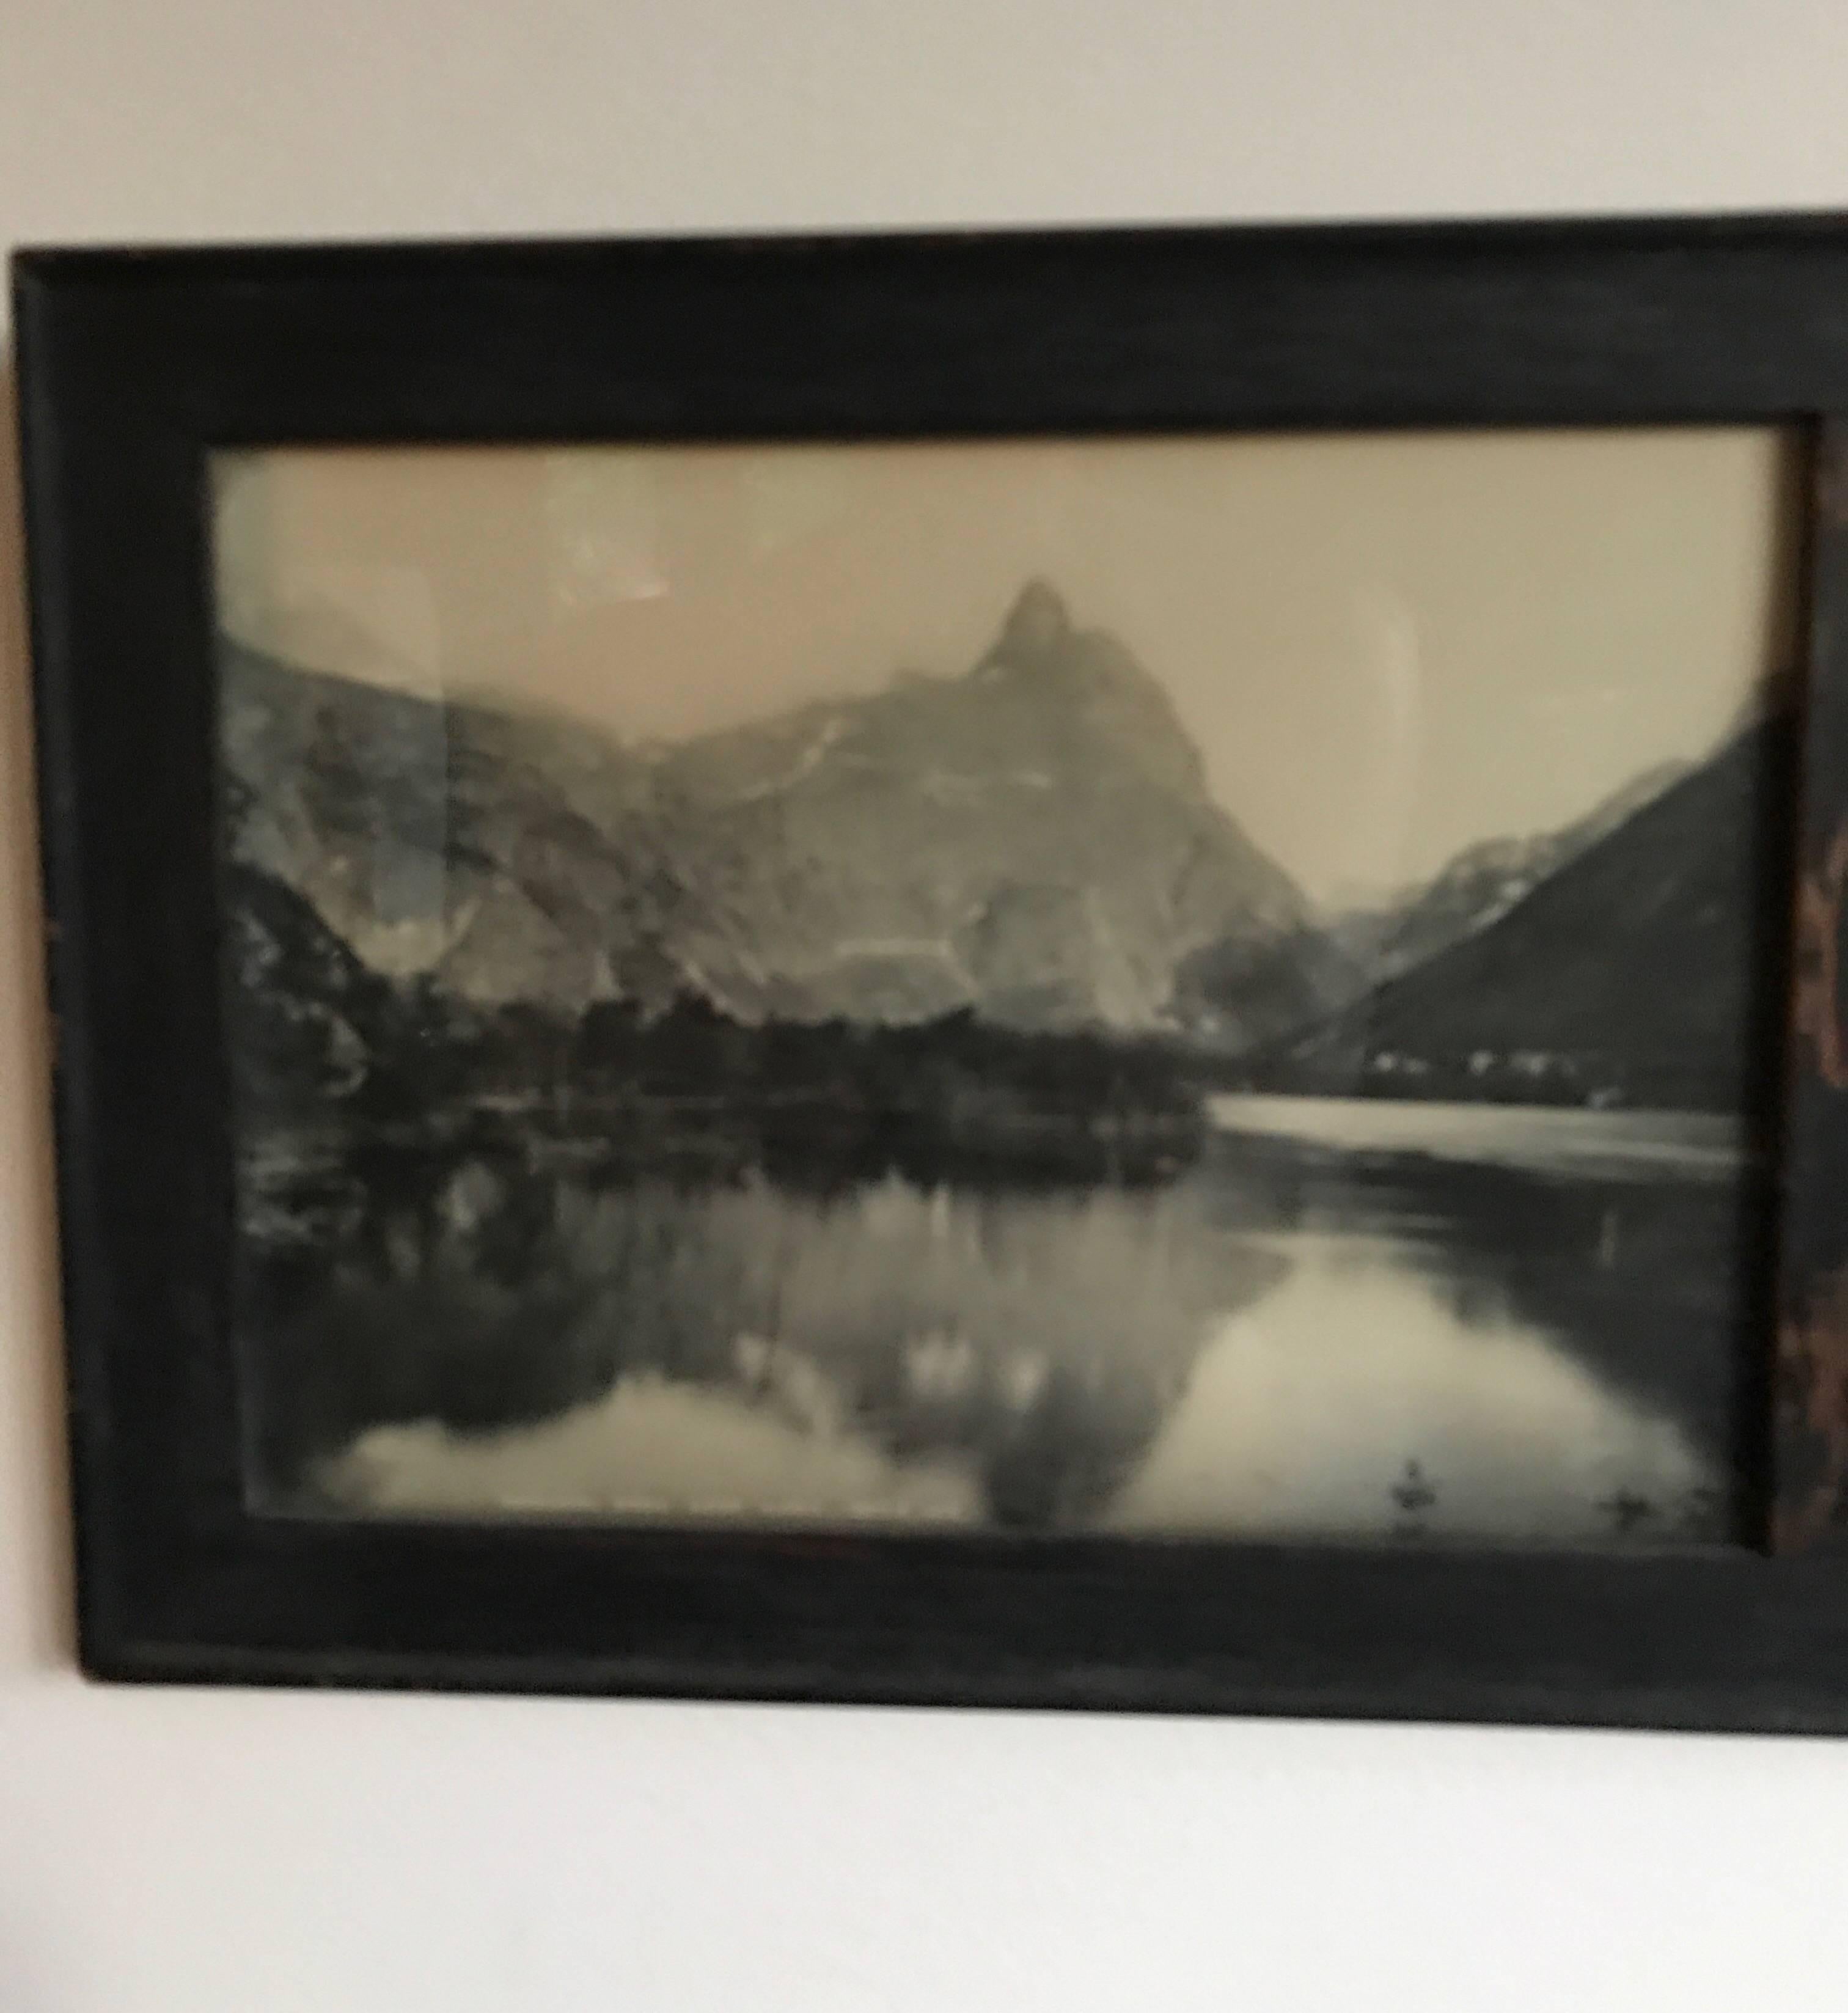 Oak 19th Century Panaramic Scenic Black and White Photograph of Loen Lake Nordfjord For Sale